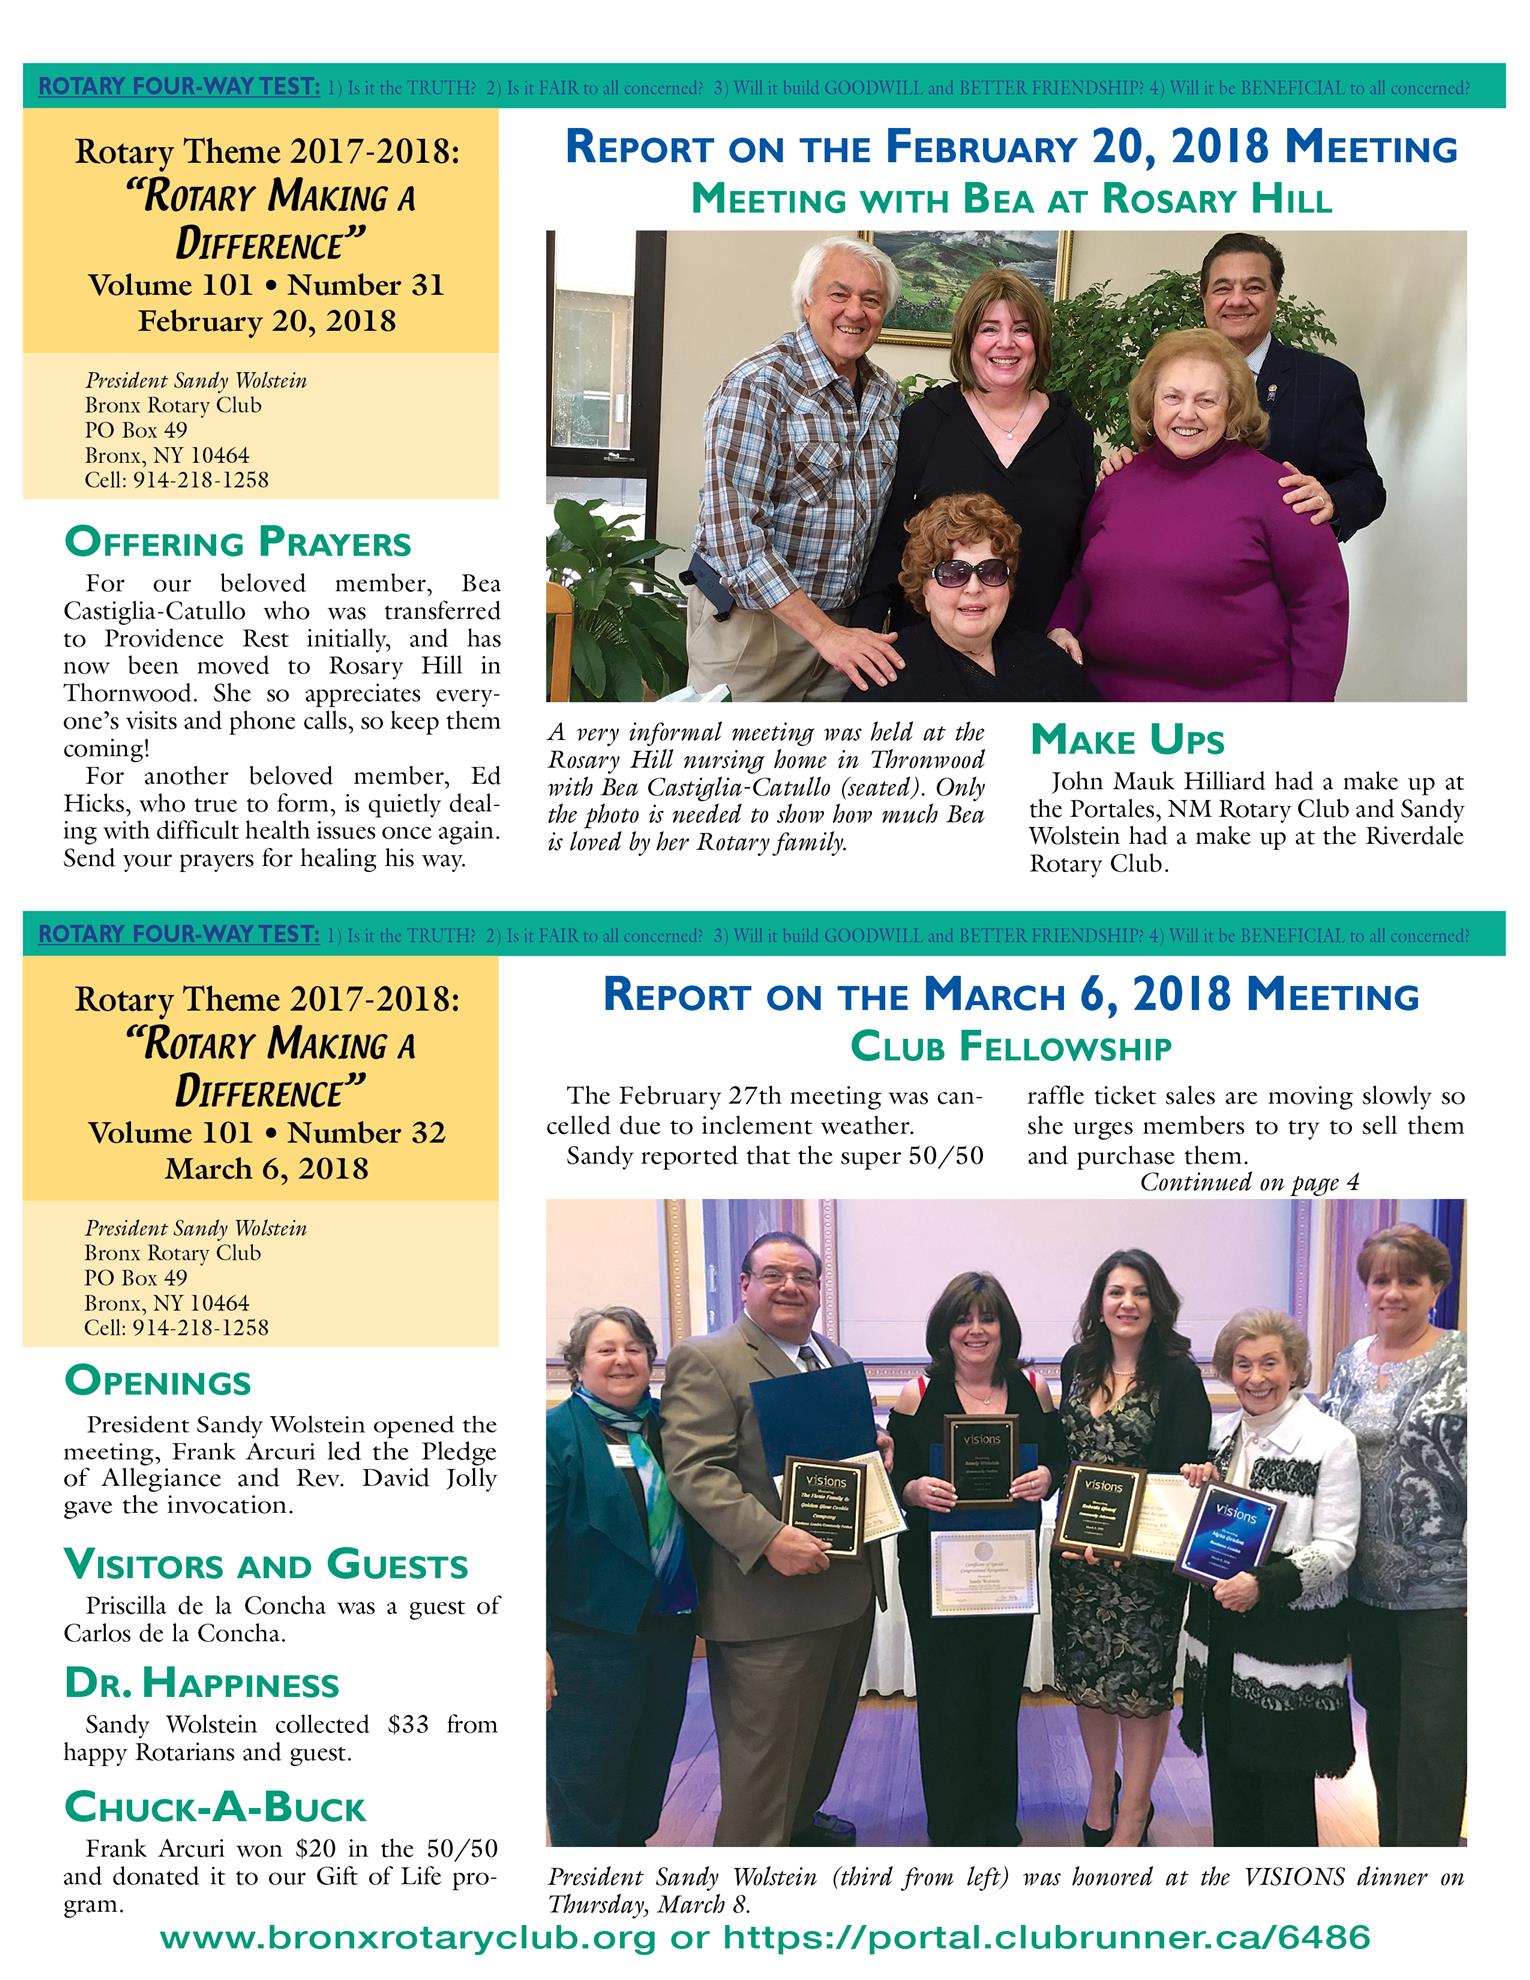 Tuesdays Newsletter 2/13-3/6/18 p